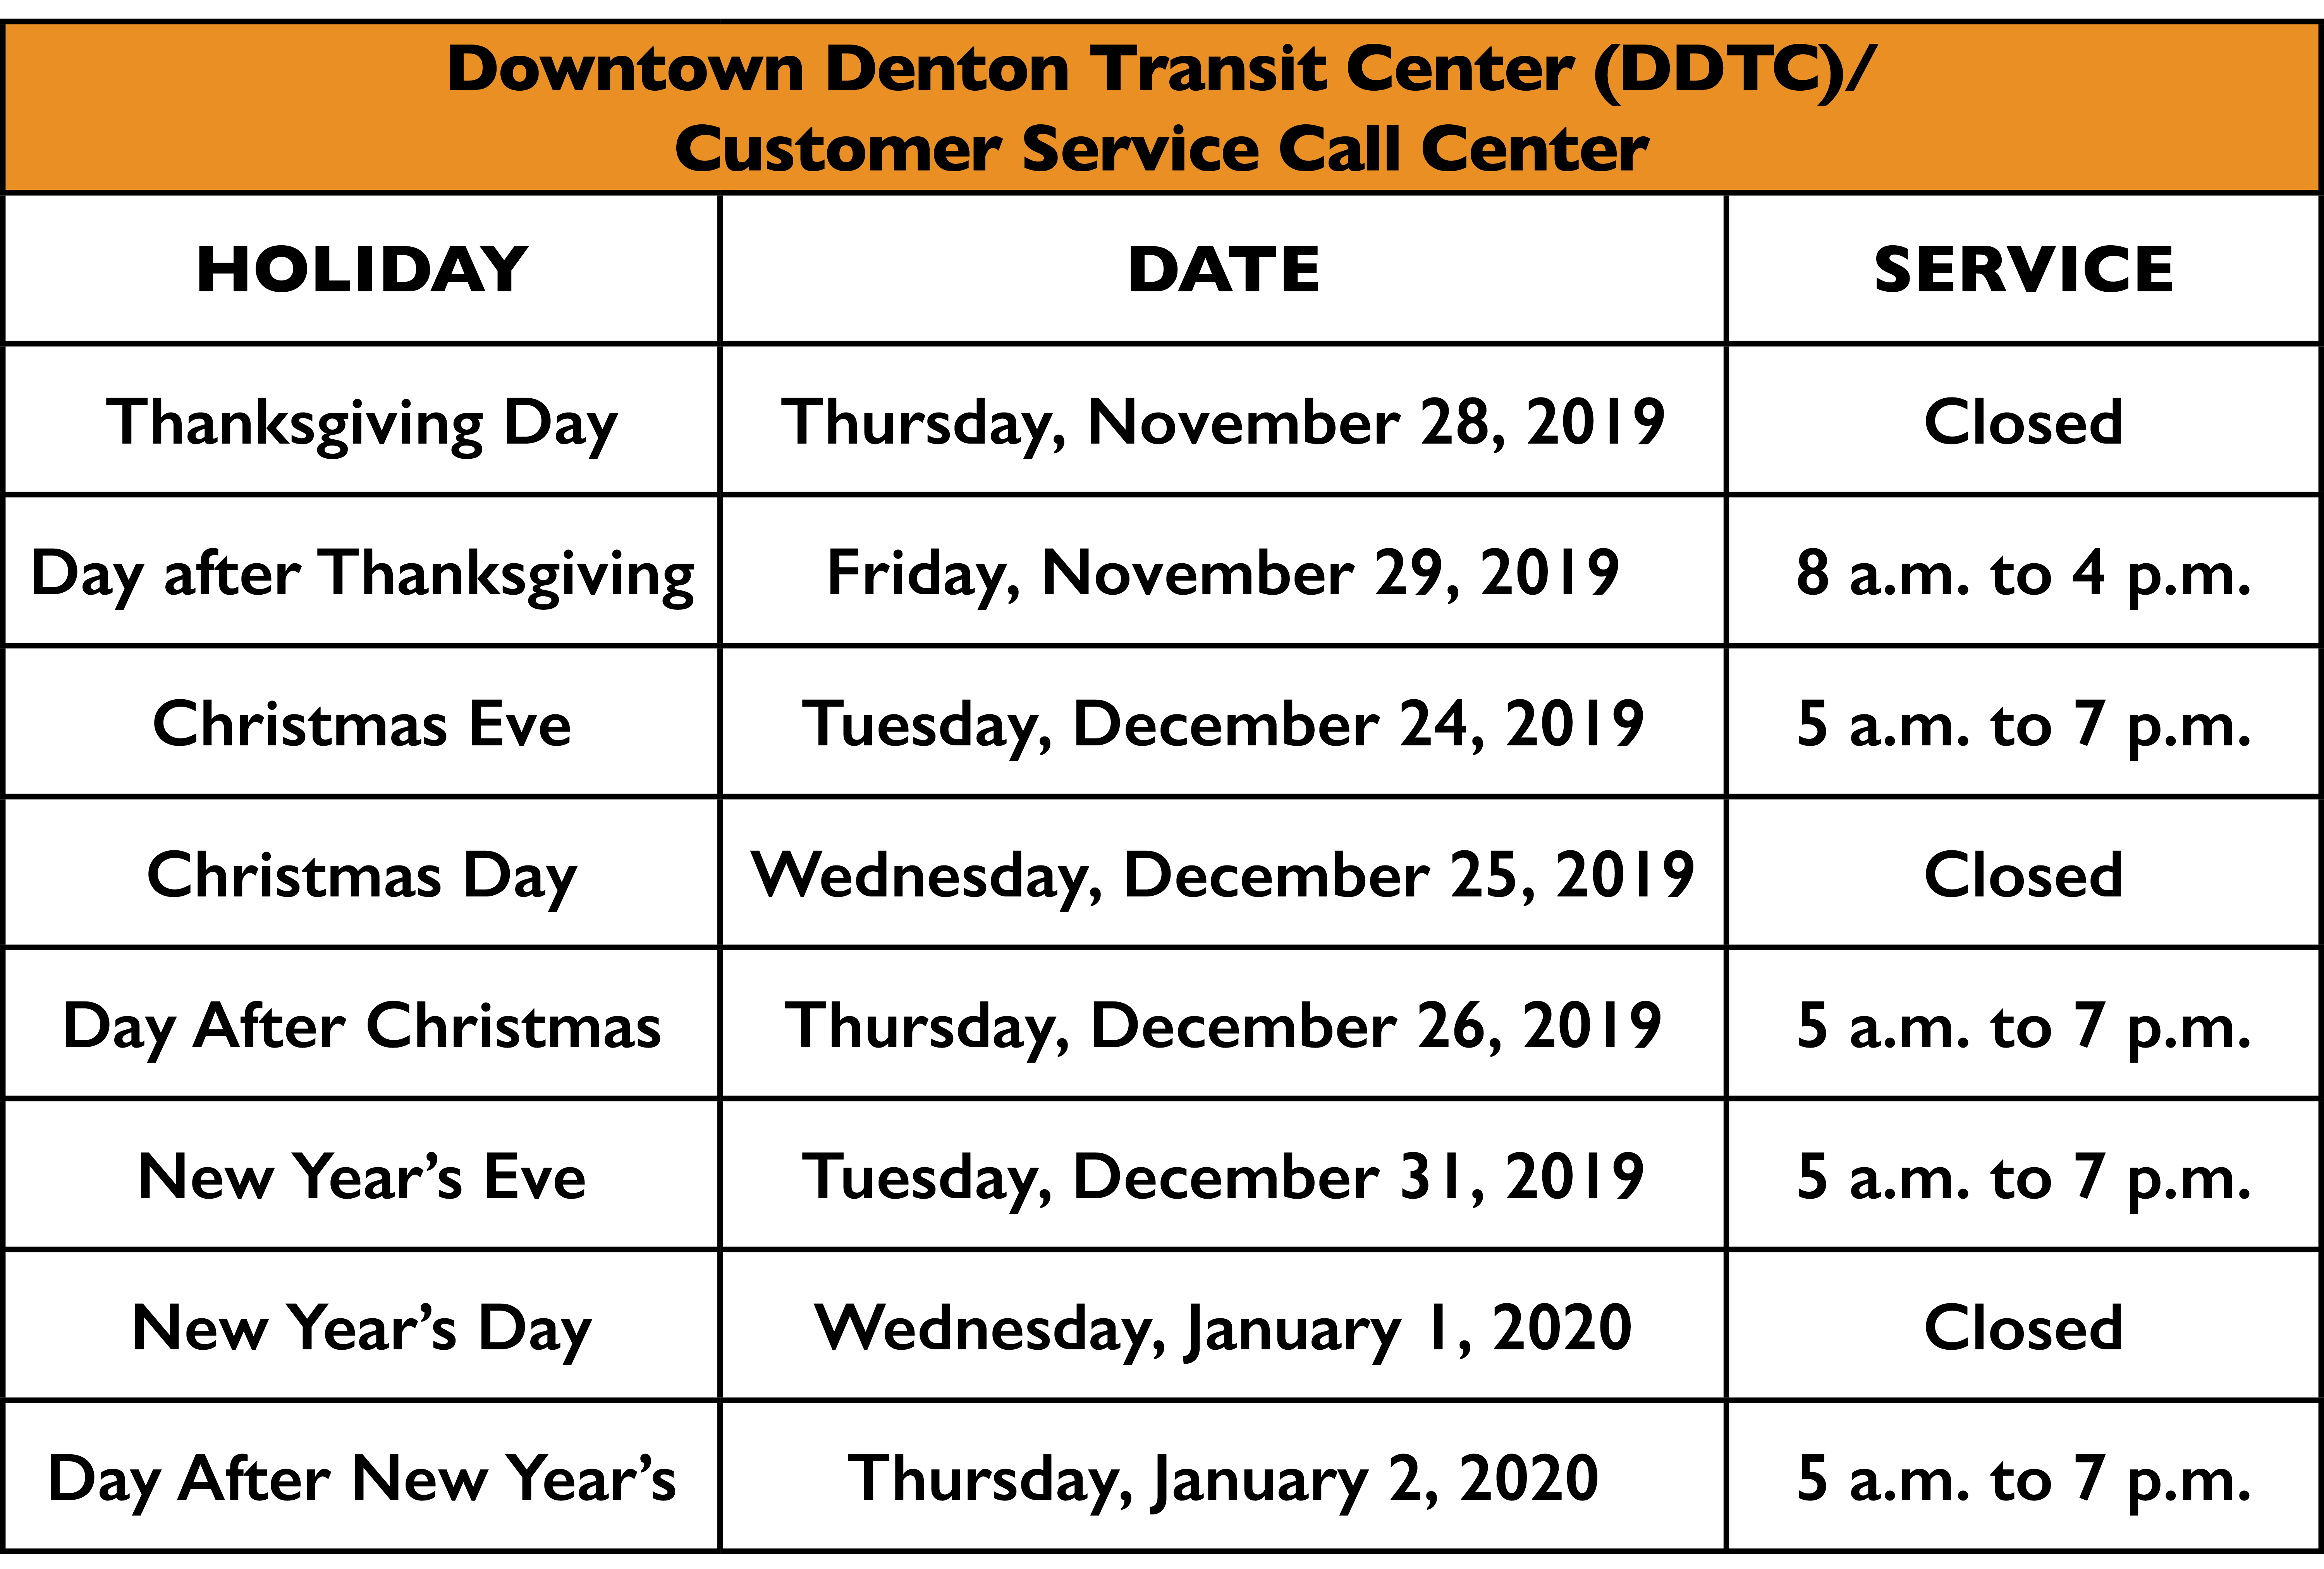 Downtown Denton Transit Center (DDTC)/Customer Service Call Center •	Thanksgiving Day (Thursday, November 28, 2019) – Closed •	Day after Thanksgiving (Friday, November 29, 2019) – 8 a.m. to 4 p.m. •	Christmas Eve (Tuesday, December 24, 2019) – 5 a.m. to 7 p.m. •	Christmas Day (Wednesday, December 25, 2019) – Closed •	Day After Christmas (Thursday, December 26, 2019) – 5 a.m. to 7 p.m. •	New Year's Eve (Tuesday, December 31, 2019) – 5 a.m. to 7 p.m. •	New Year's Day (Wednesday, January 1, 2020) – Closed •	Day After New Year’s (Thursday, January 2, 2020) – 5 a.m. to 7 p.m.